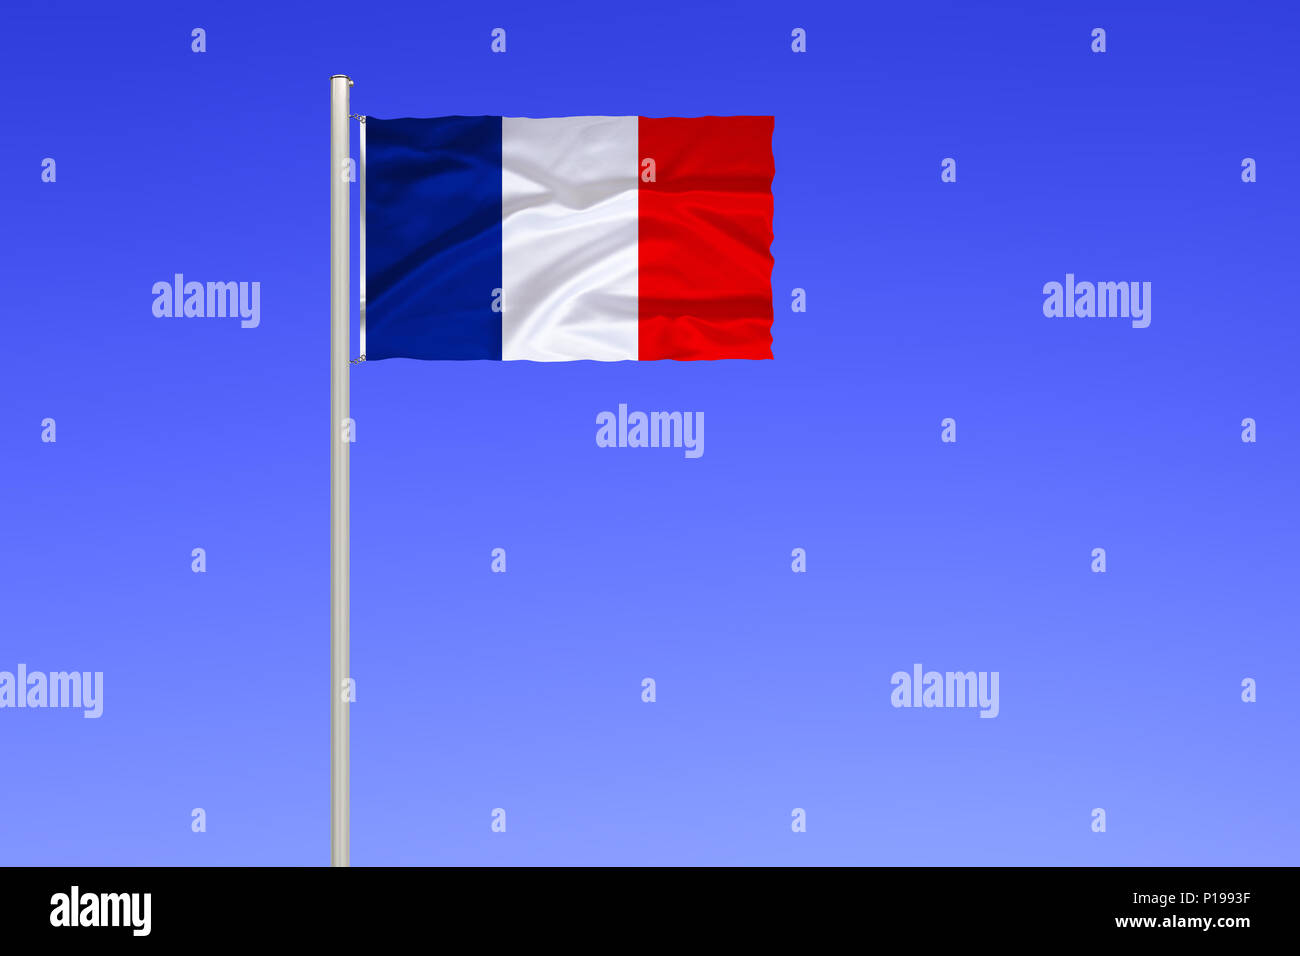 https://c8.alamy.com/compde/p1993f/flagge-frankreich-flagge-von-frankreich-p1993f.jpg